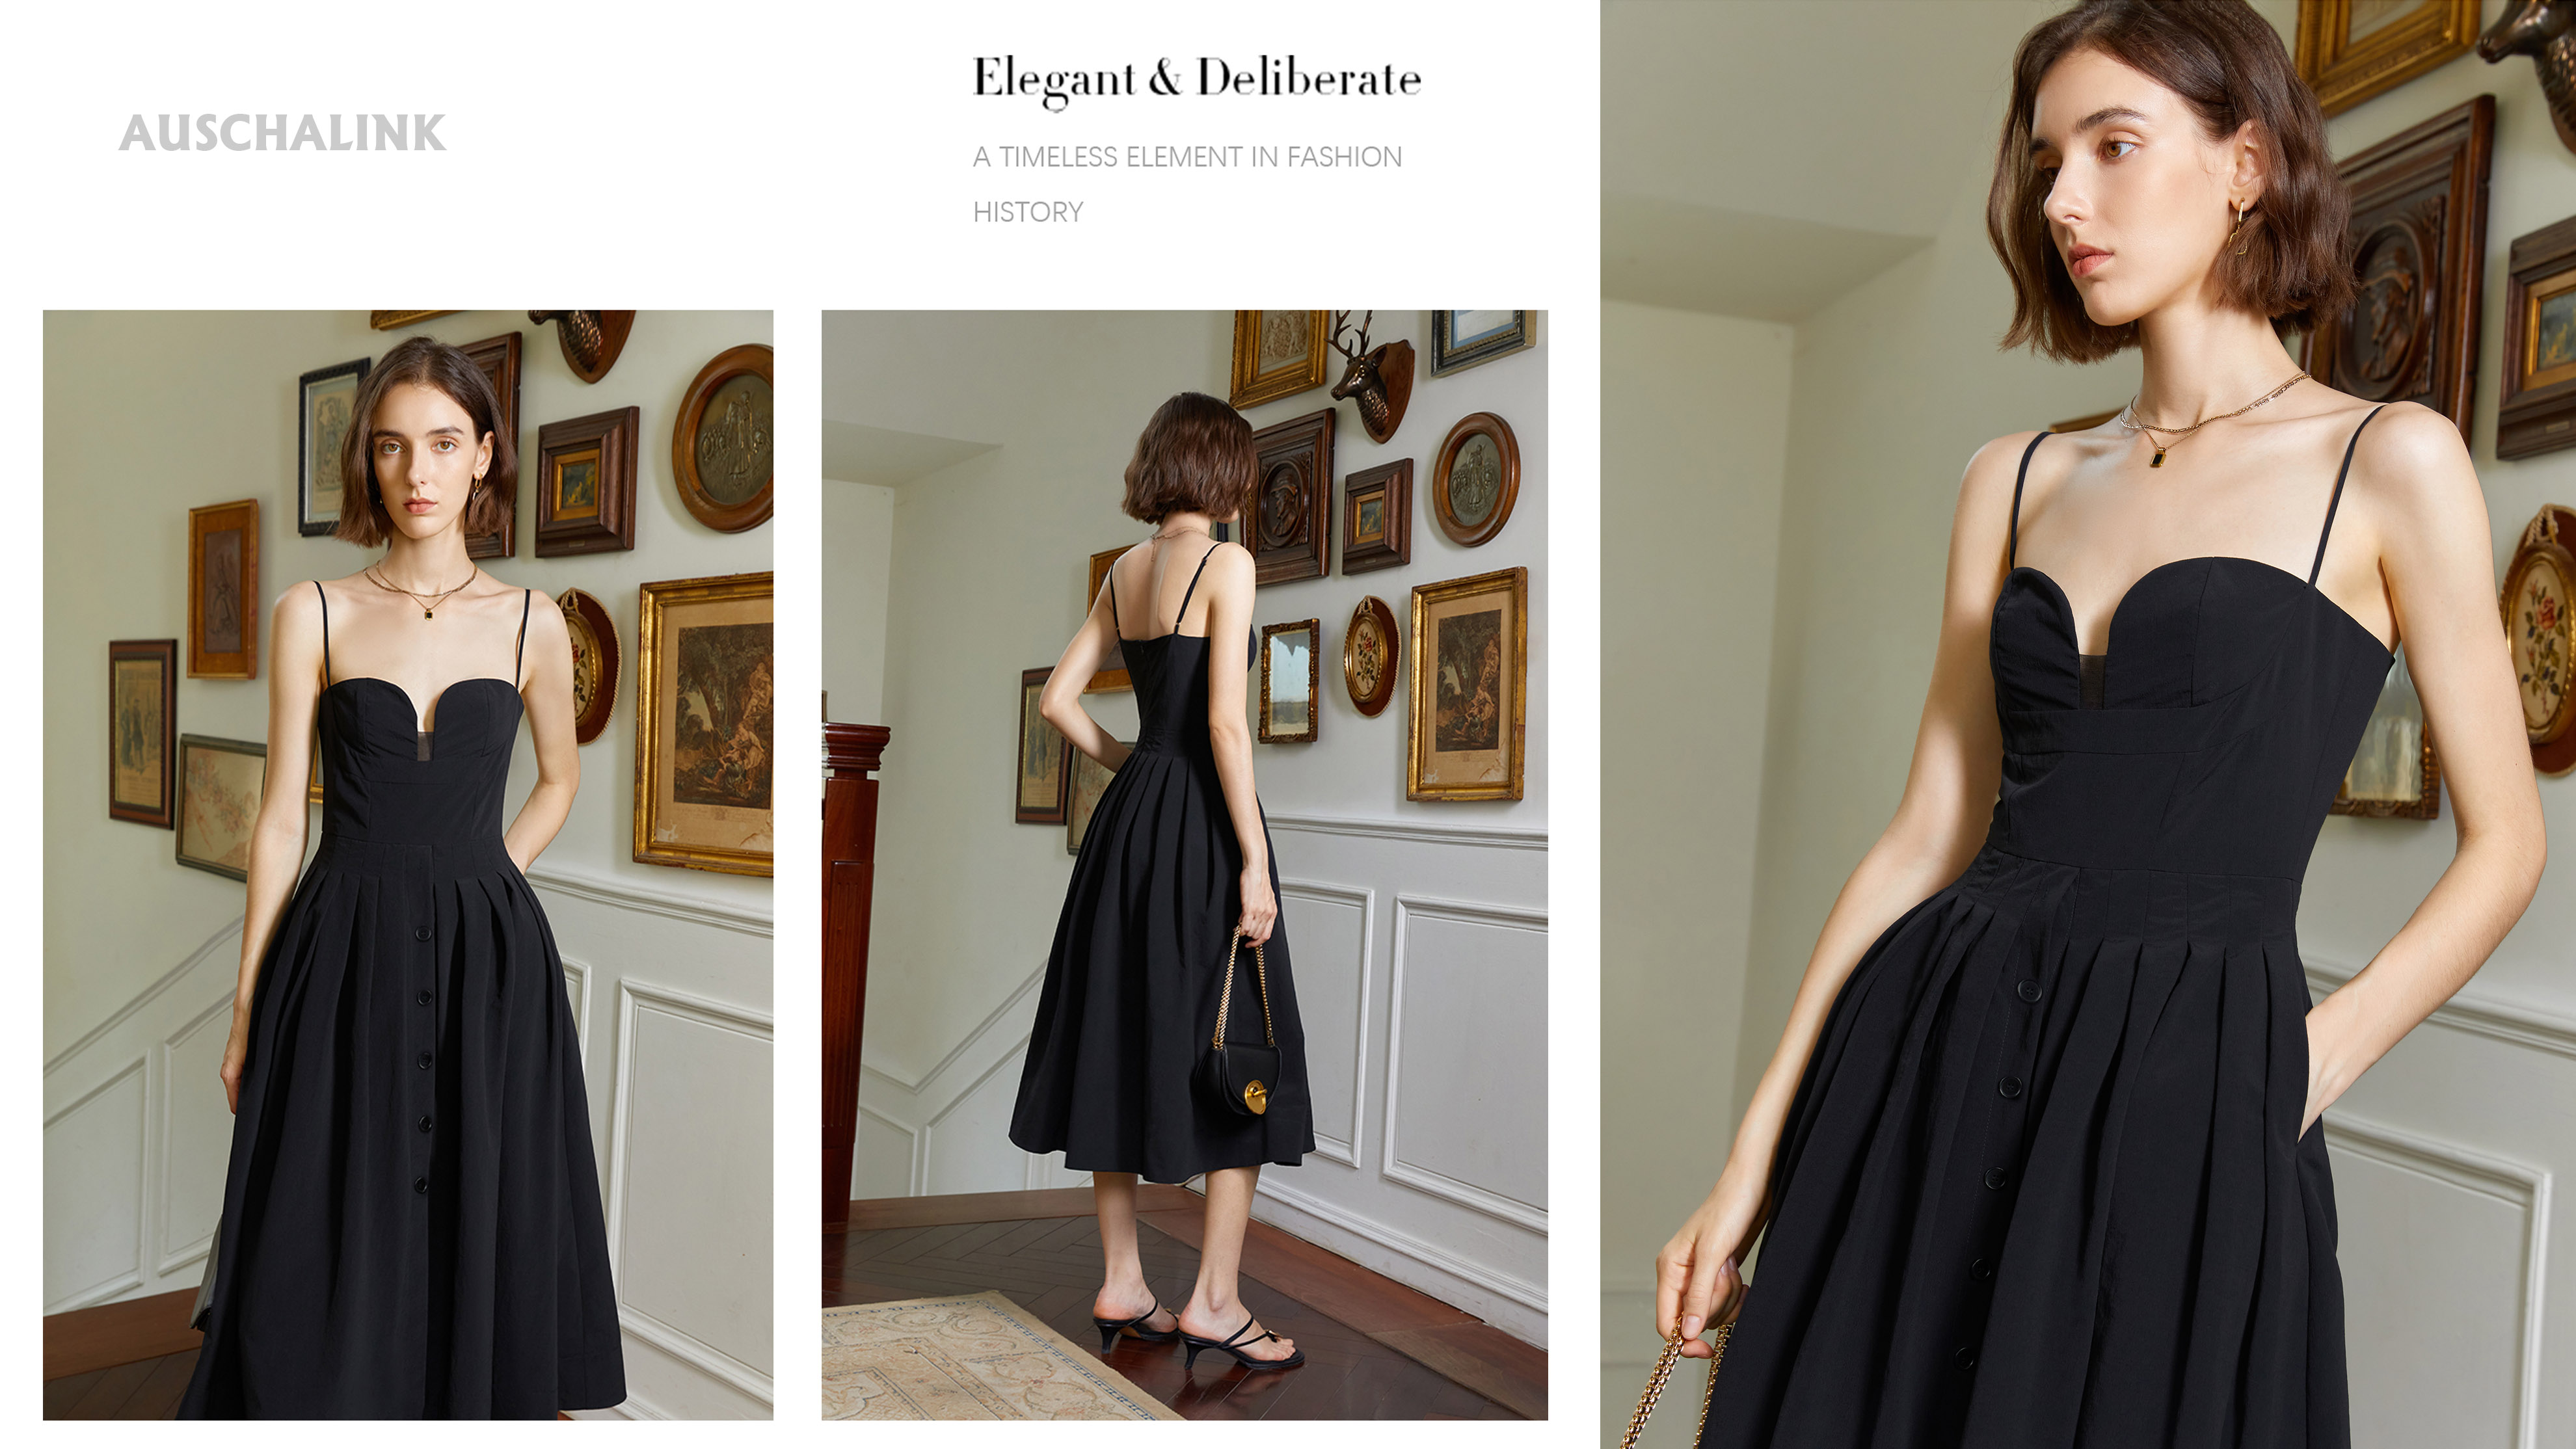 Suspender Little Black Dress Woman Products |Auschalink